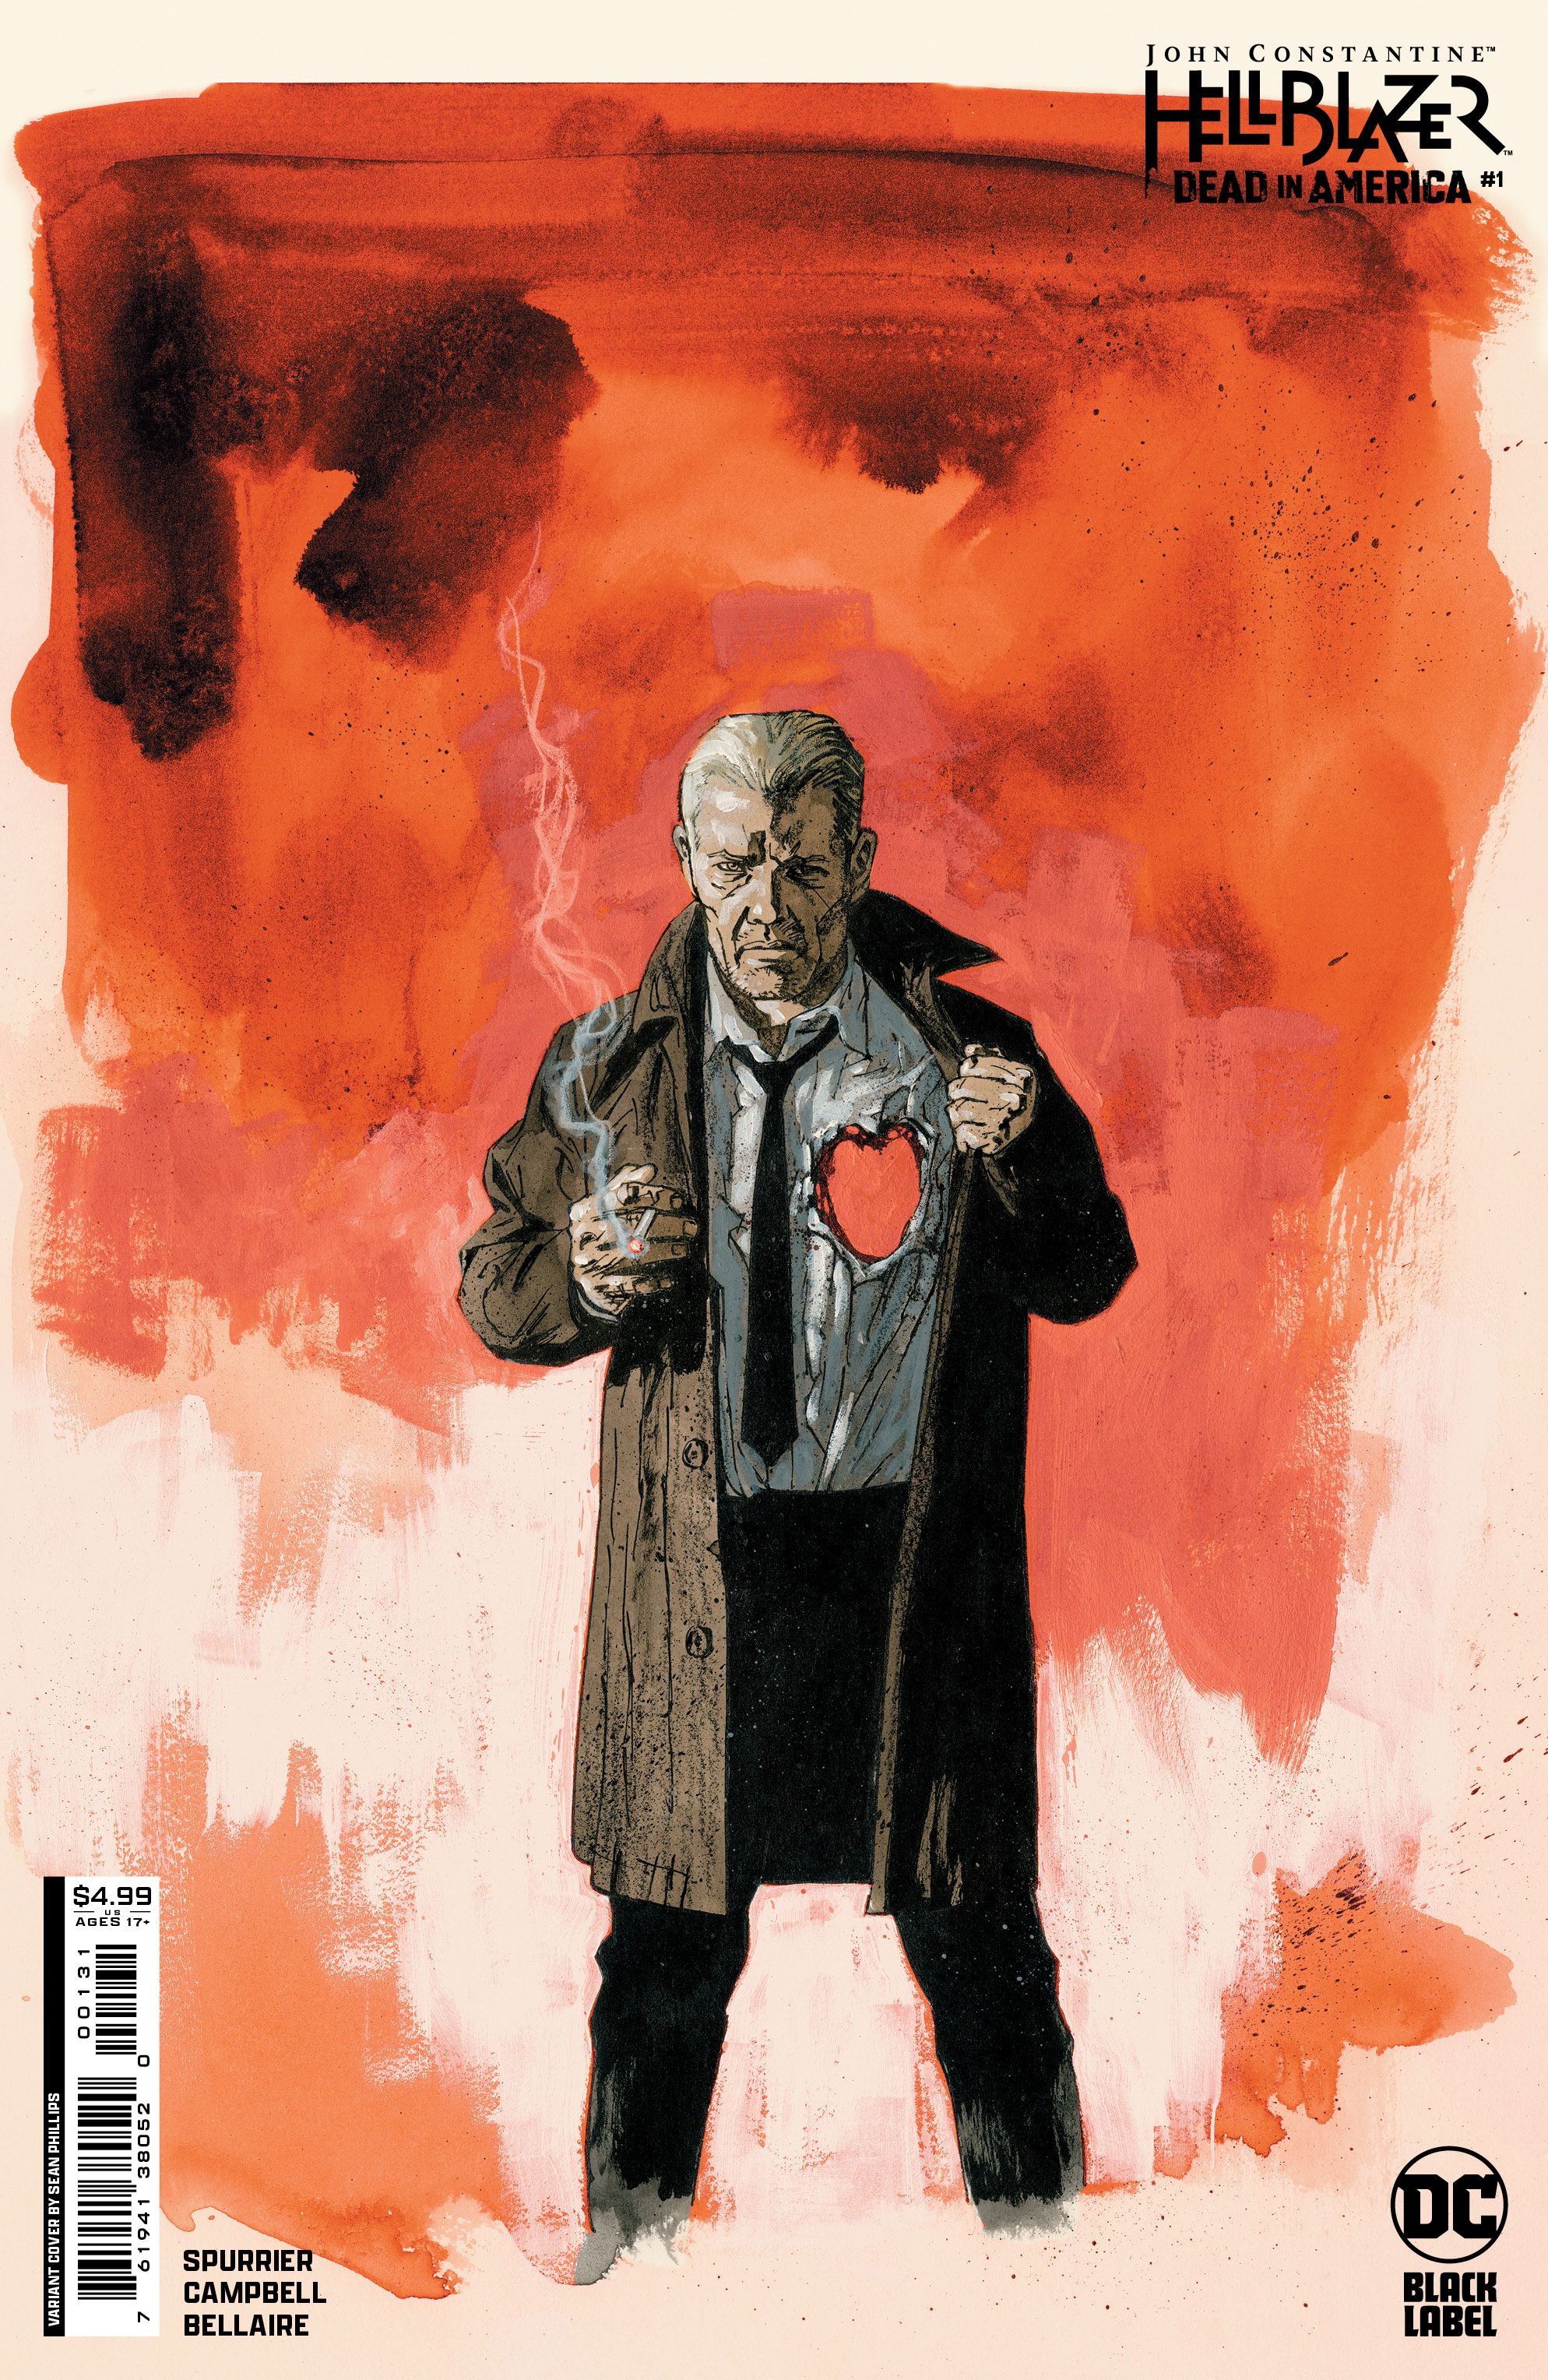 John Constantine, Hellblazer Dead in America #1 Cover C Sean Phillips Variant (Mature) (Of 8)